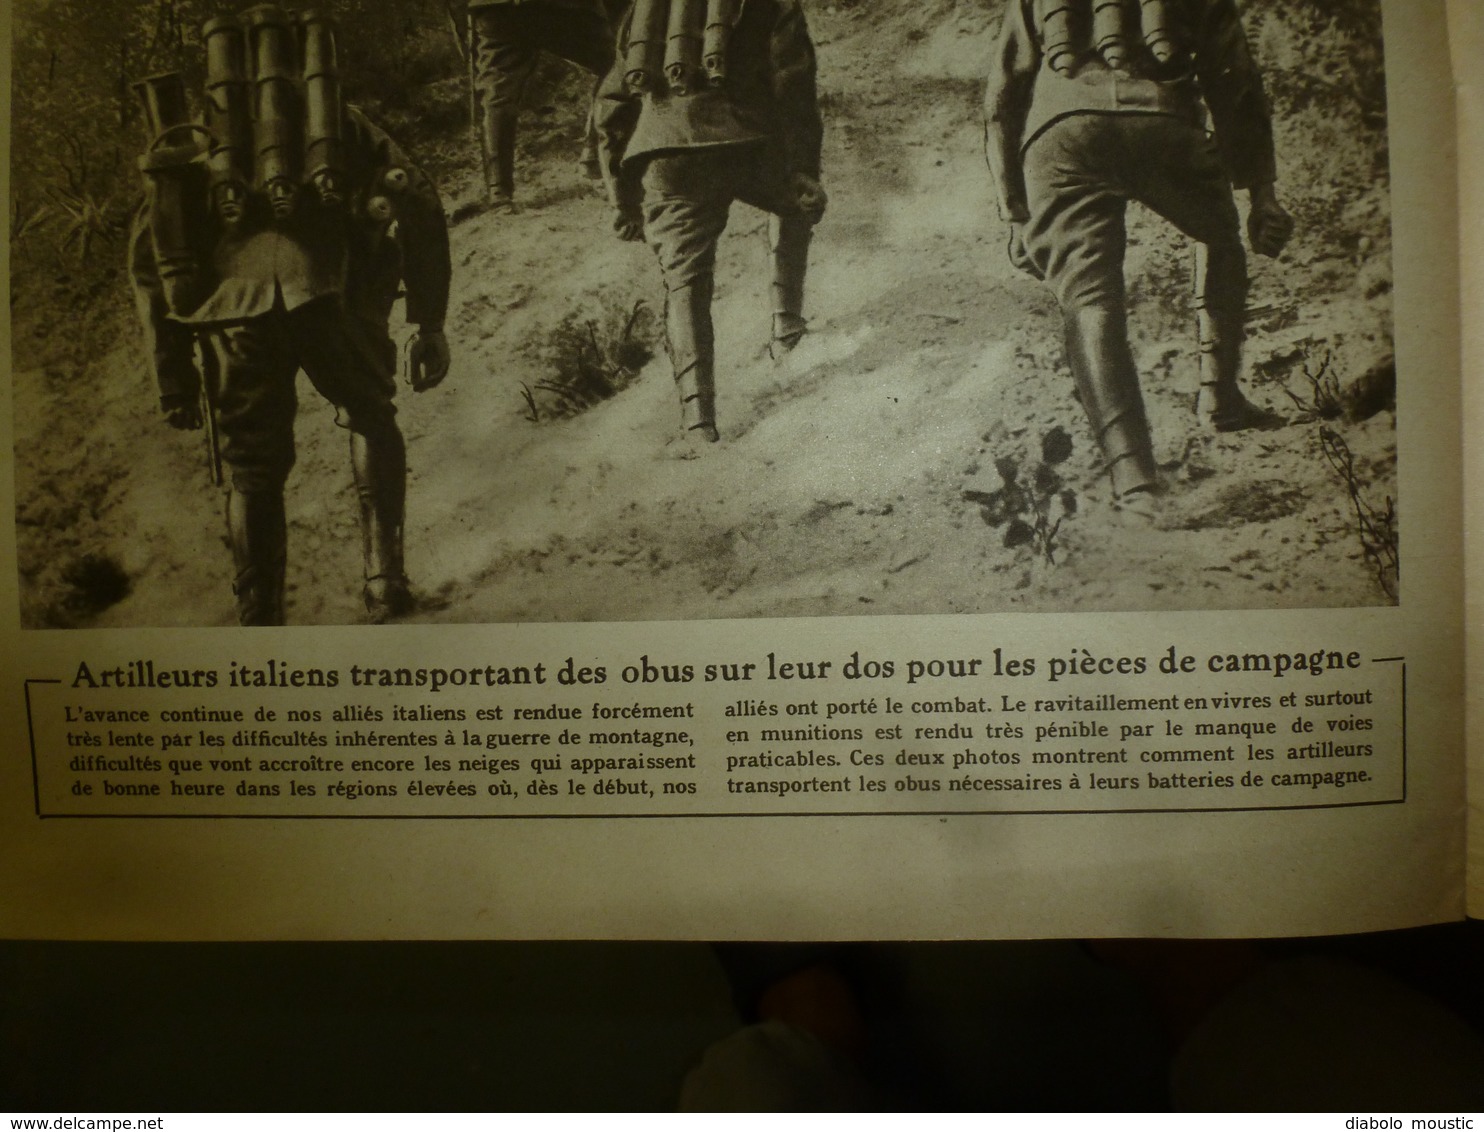 1915 LE MIROIR : Hier ruben im Gott 4 Tapfere Helden : Habael Albredik Landw,Thonnis Riller Landw,Alns Doubennmerkl,etc